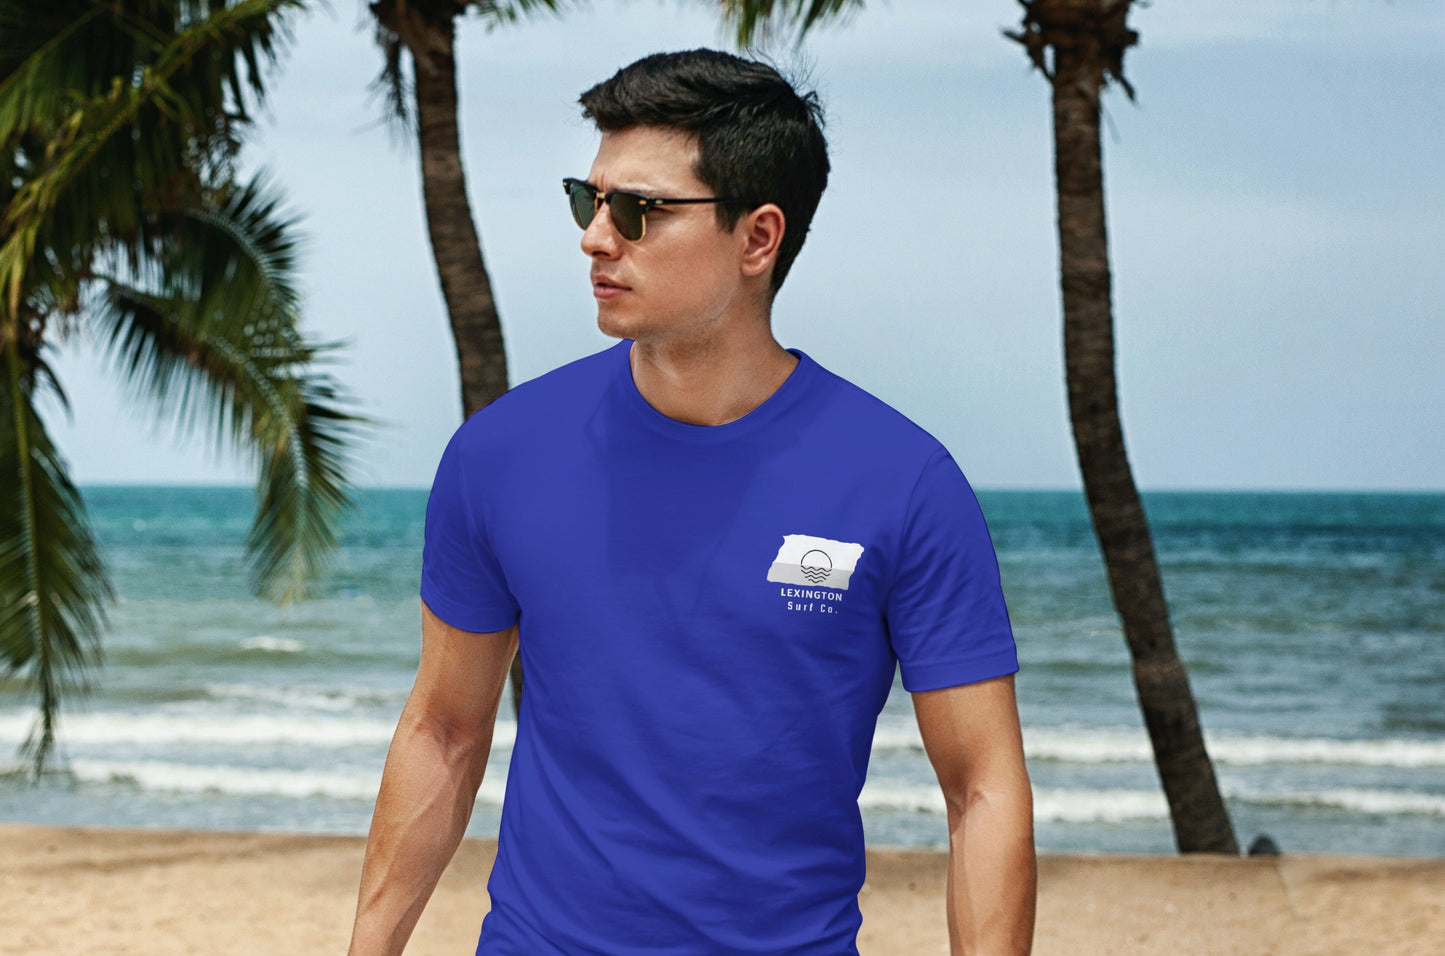 Lexington Surf Co. Blue Surfboard Shirt